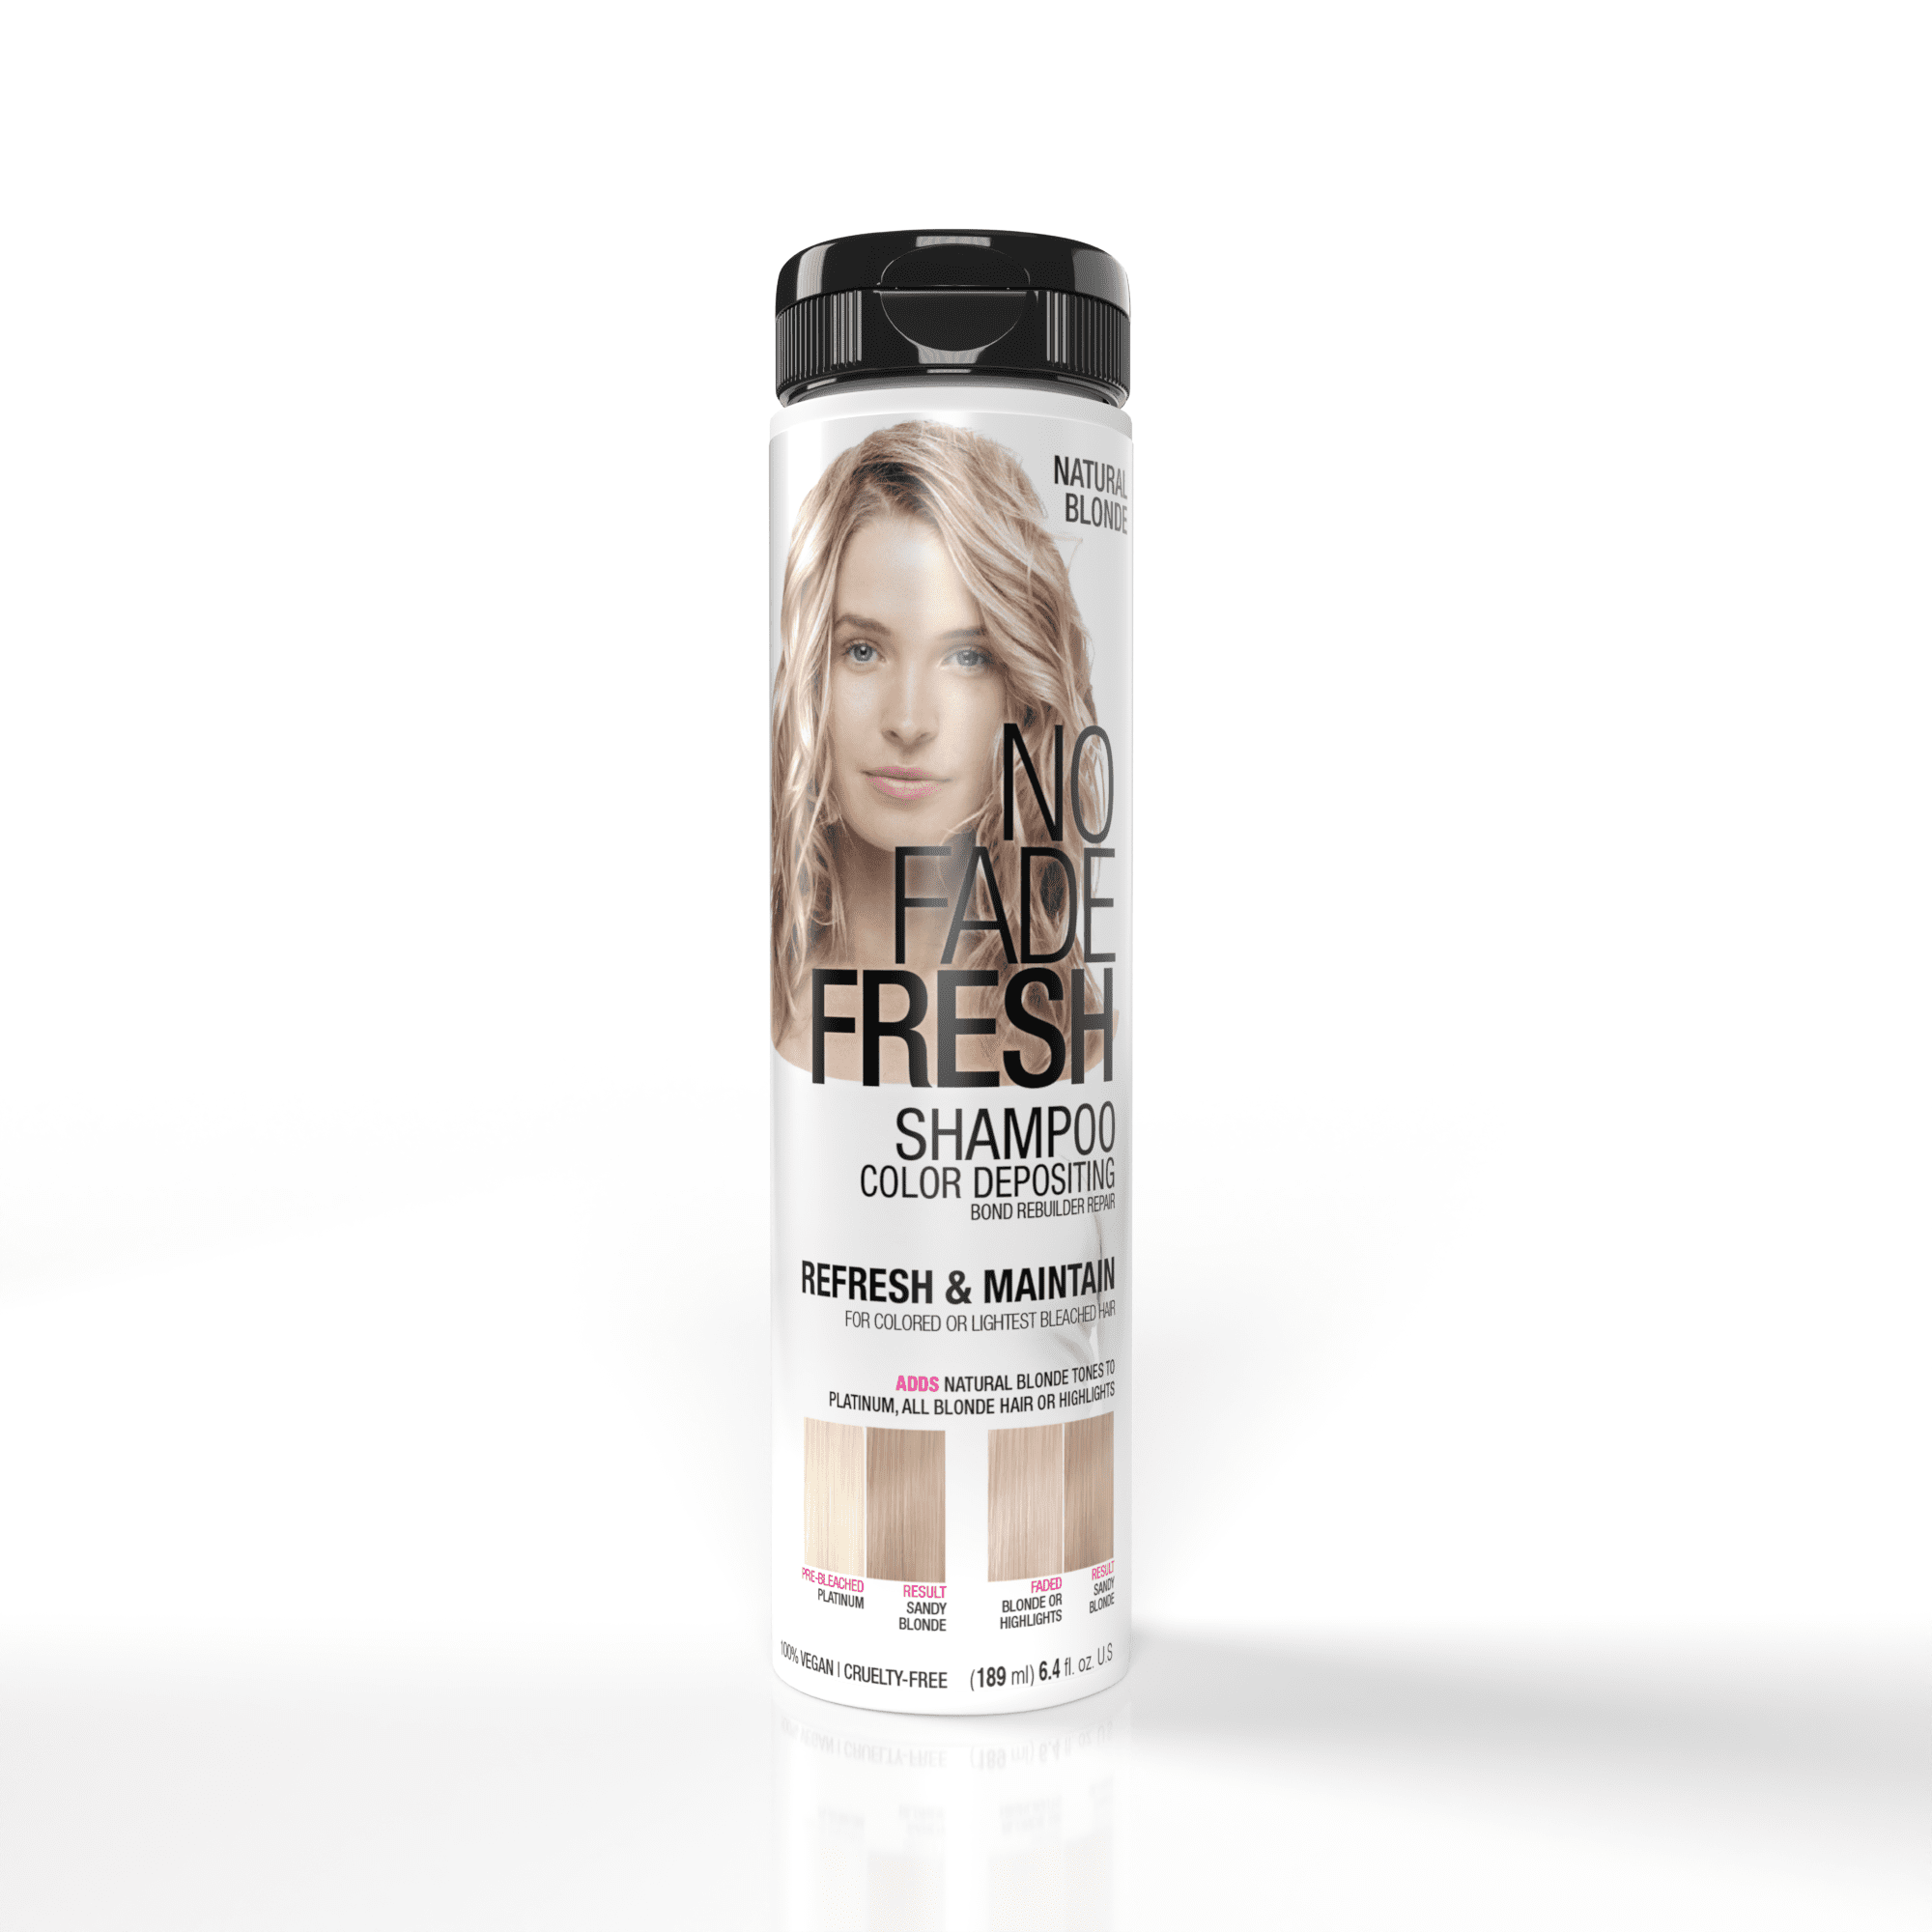 Natural Blonde Shampoo | For A Natural Blonde Tone | No Fade Fresh